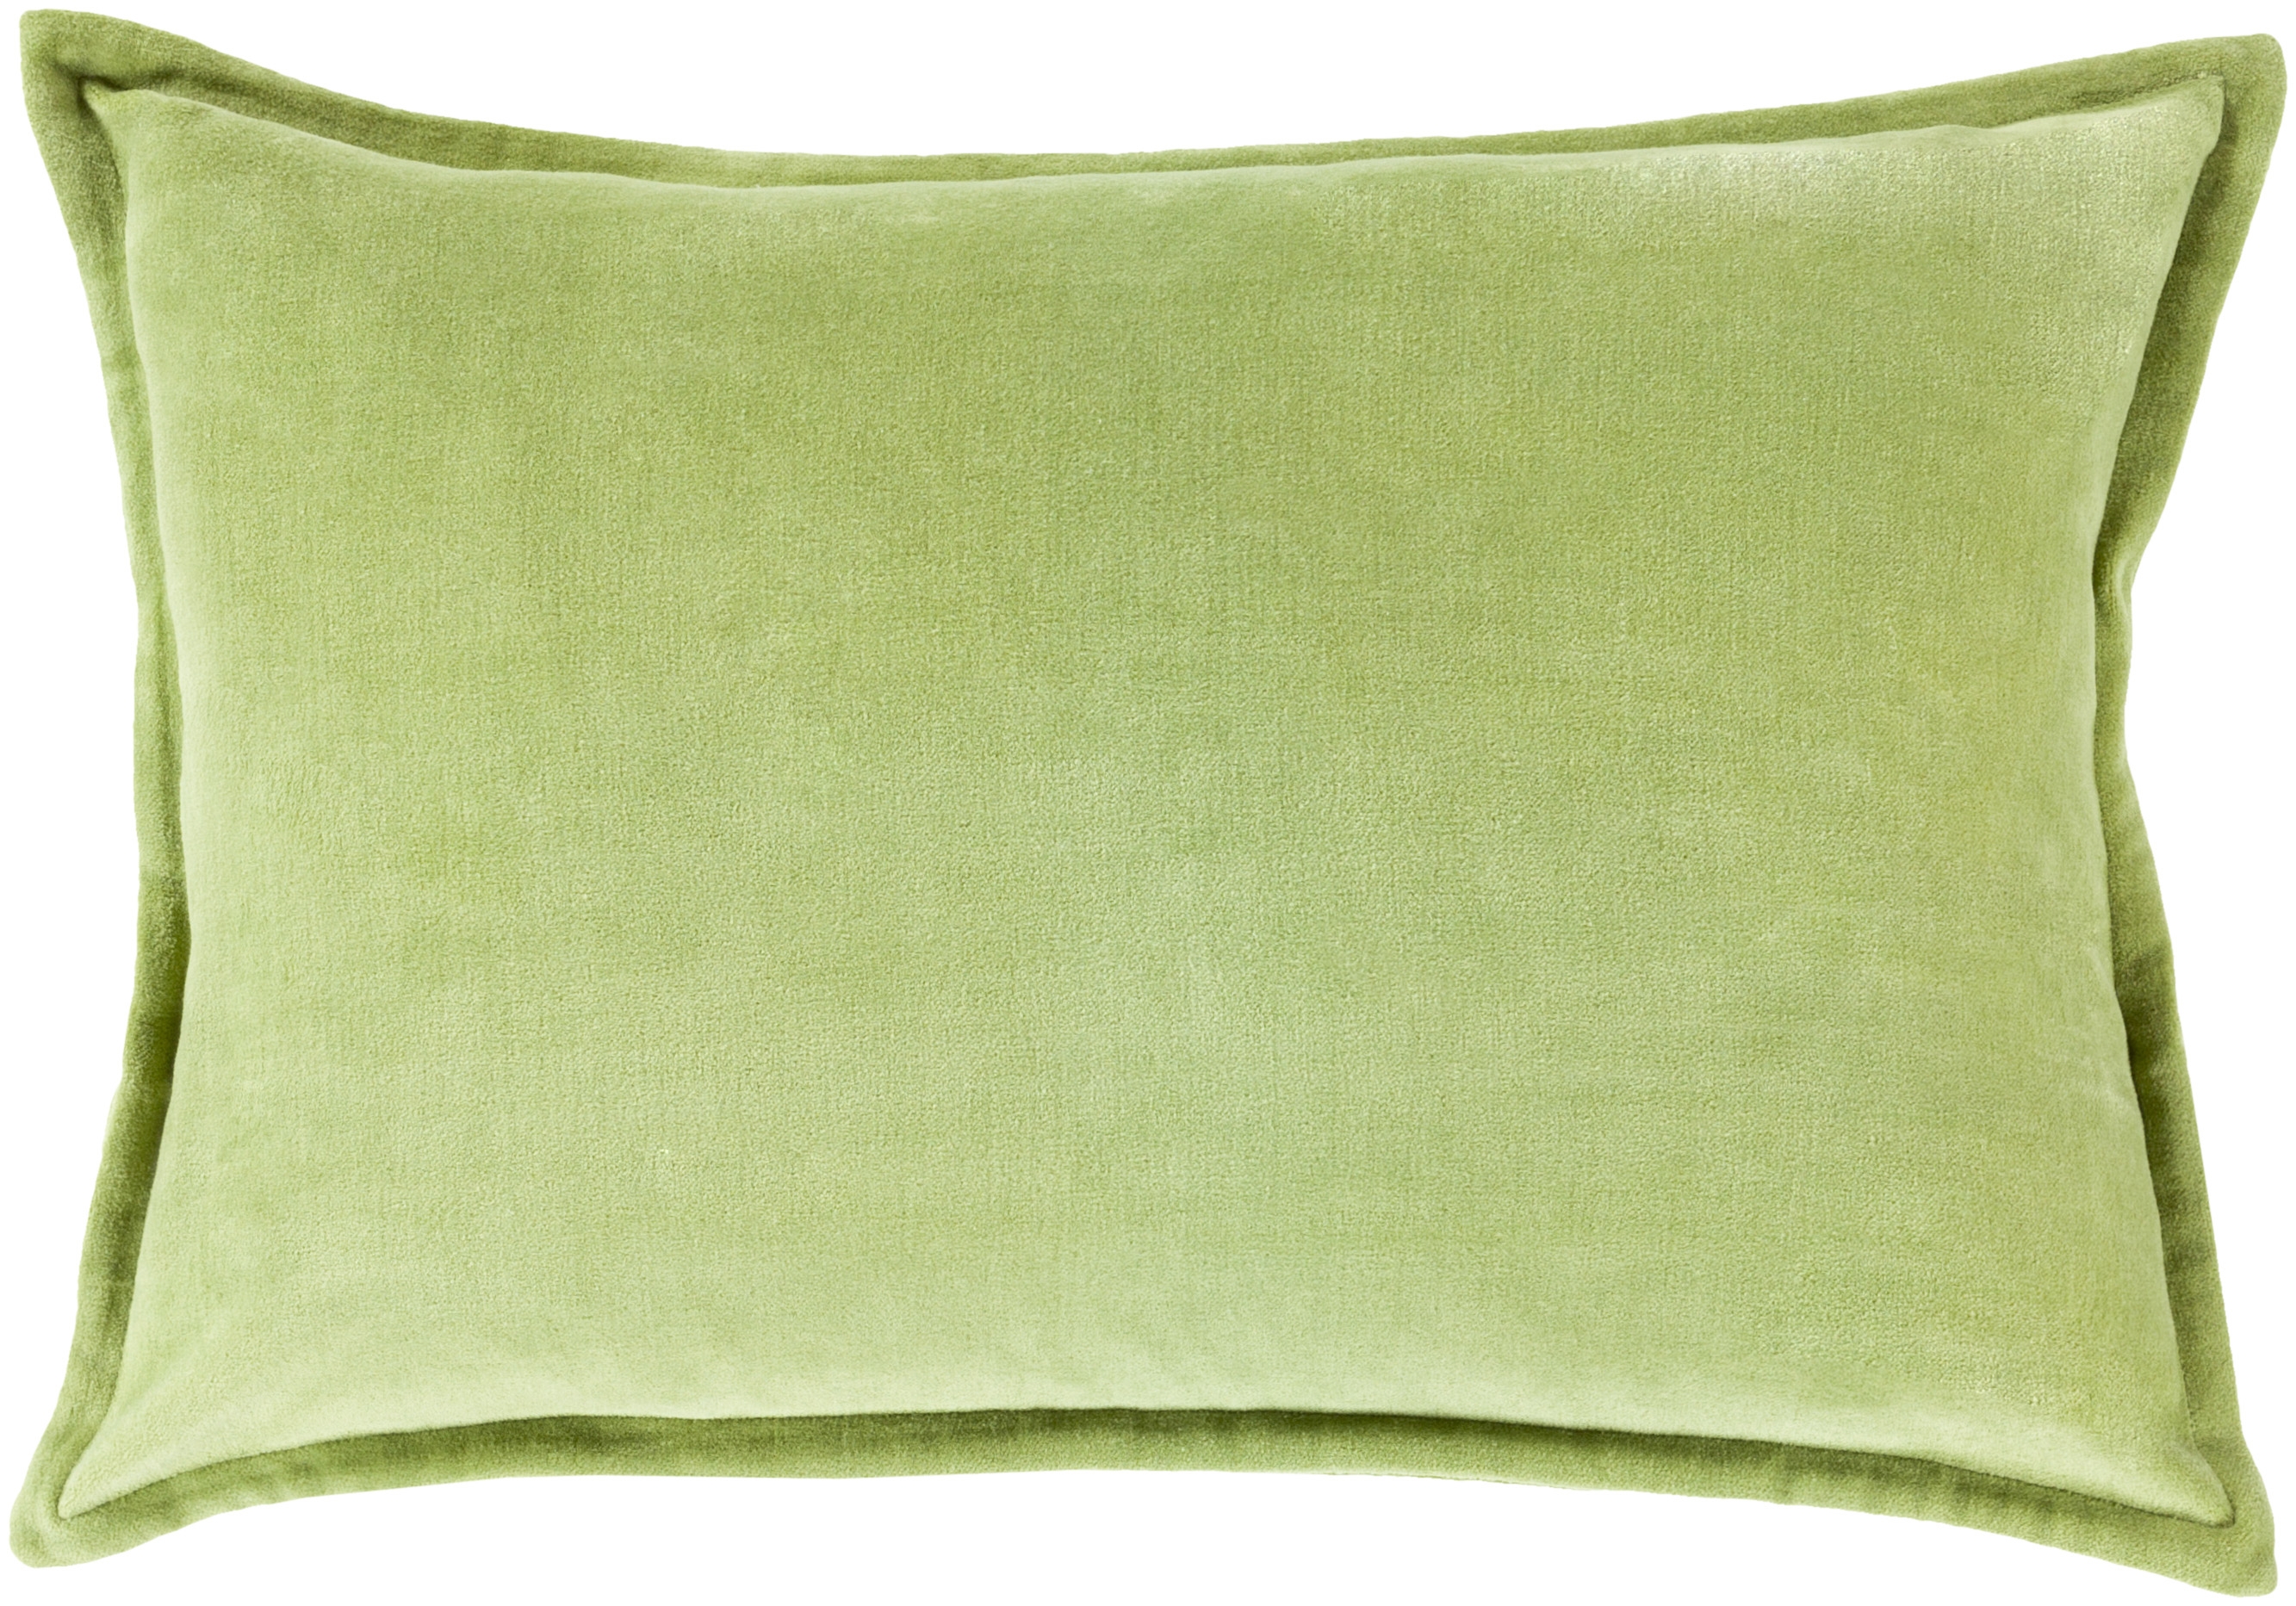 Cotton Velvet Throw Pillow, 20" x 20", with down insert - Image 1